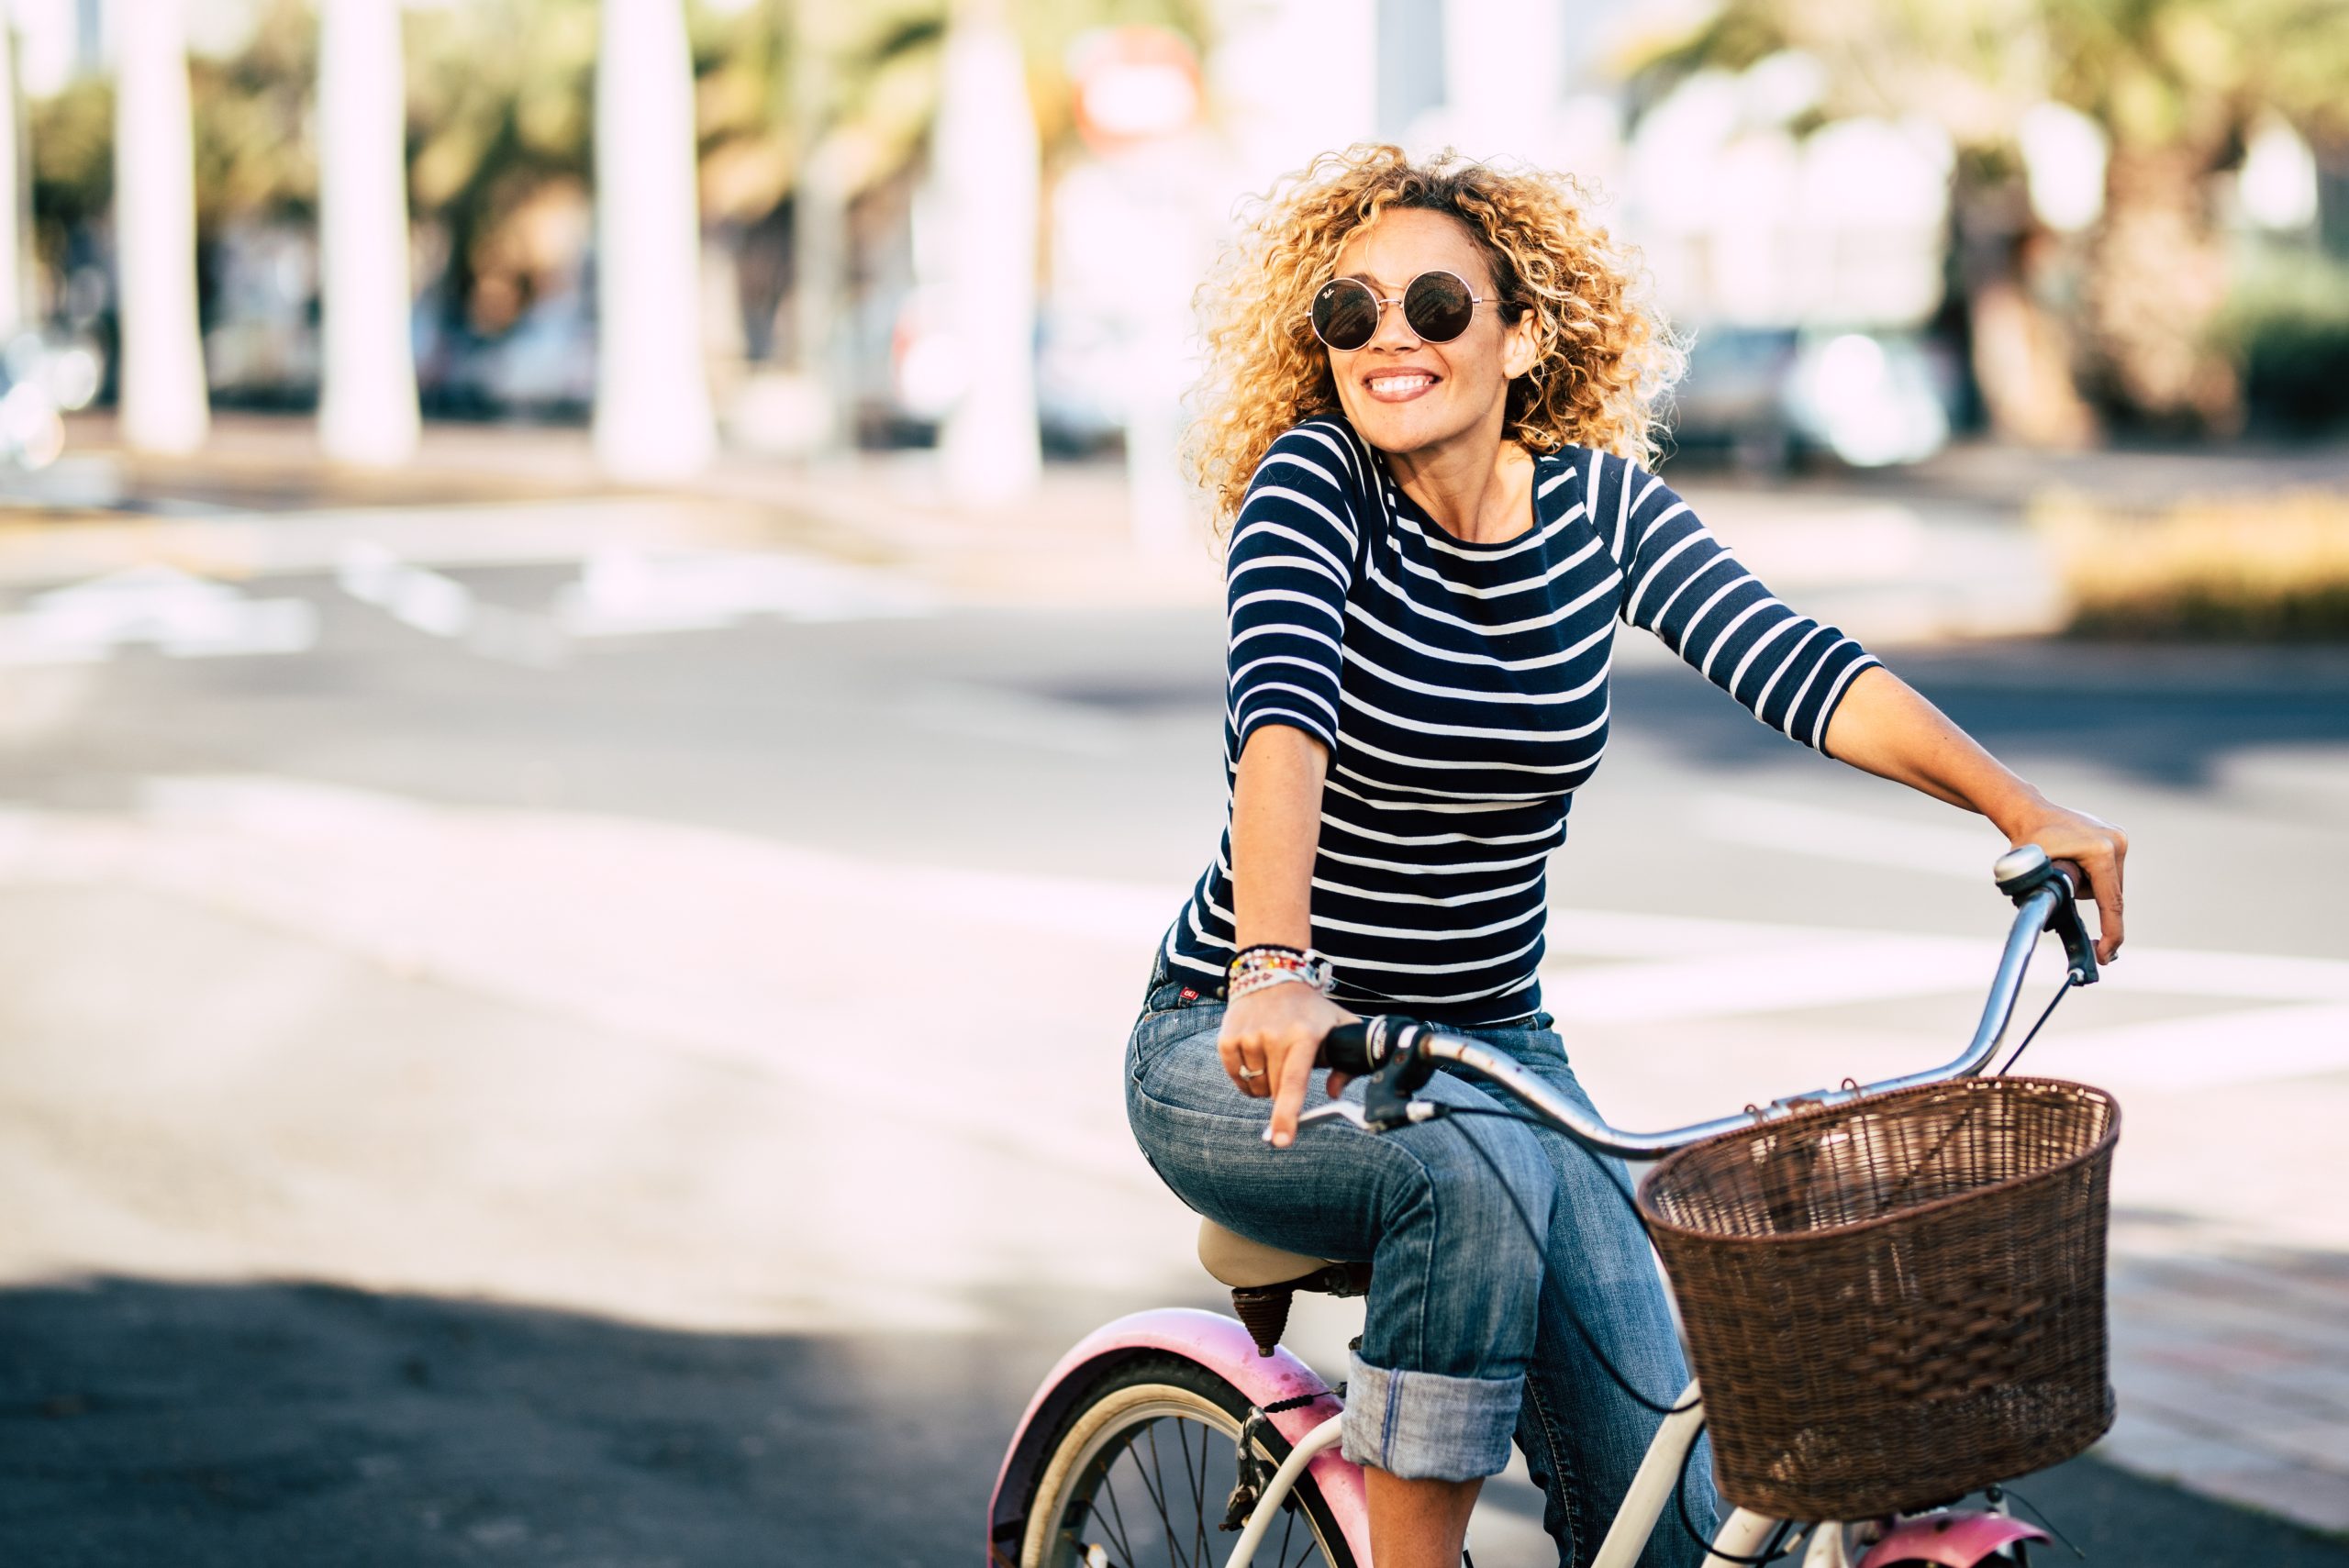 Lady in striped shirt riding bike